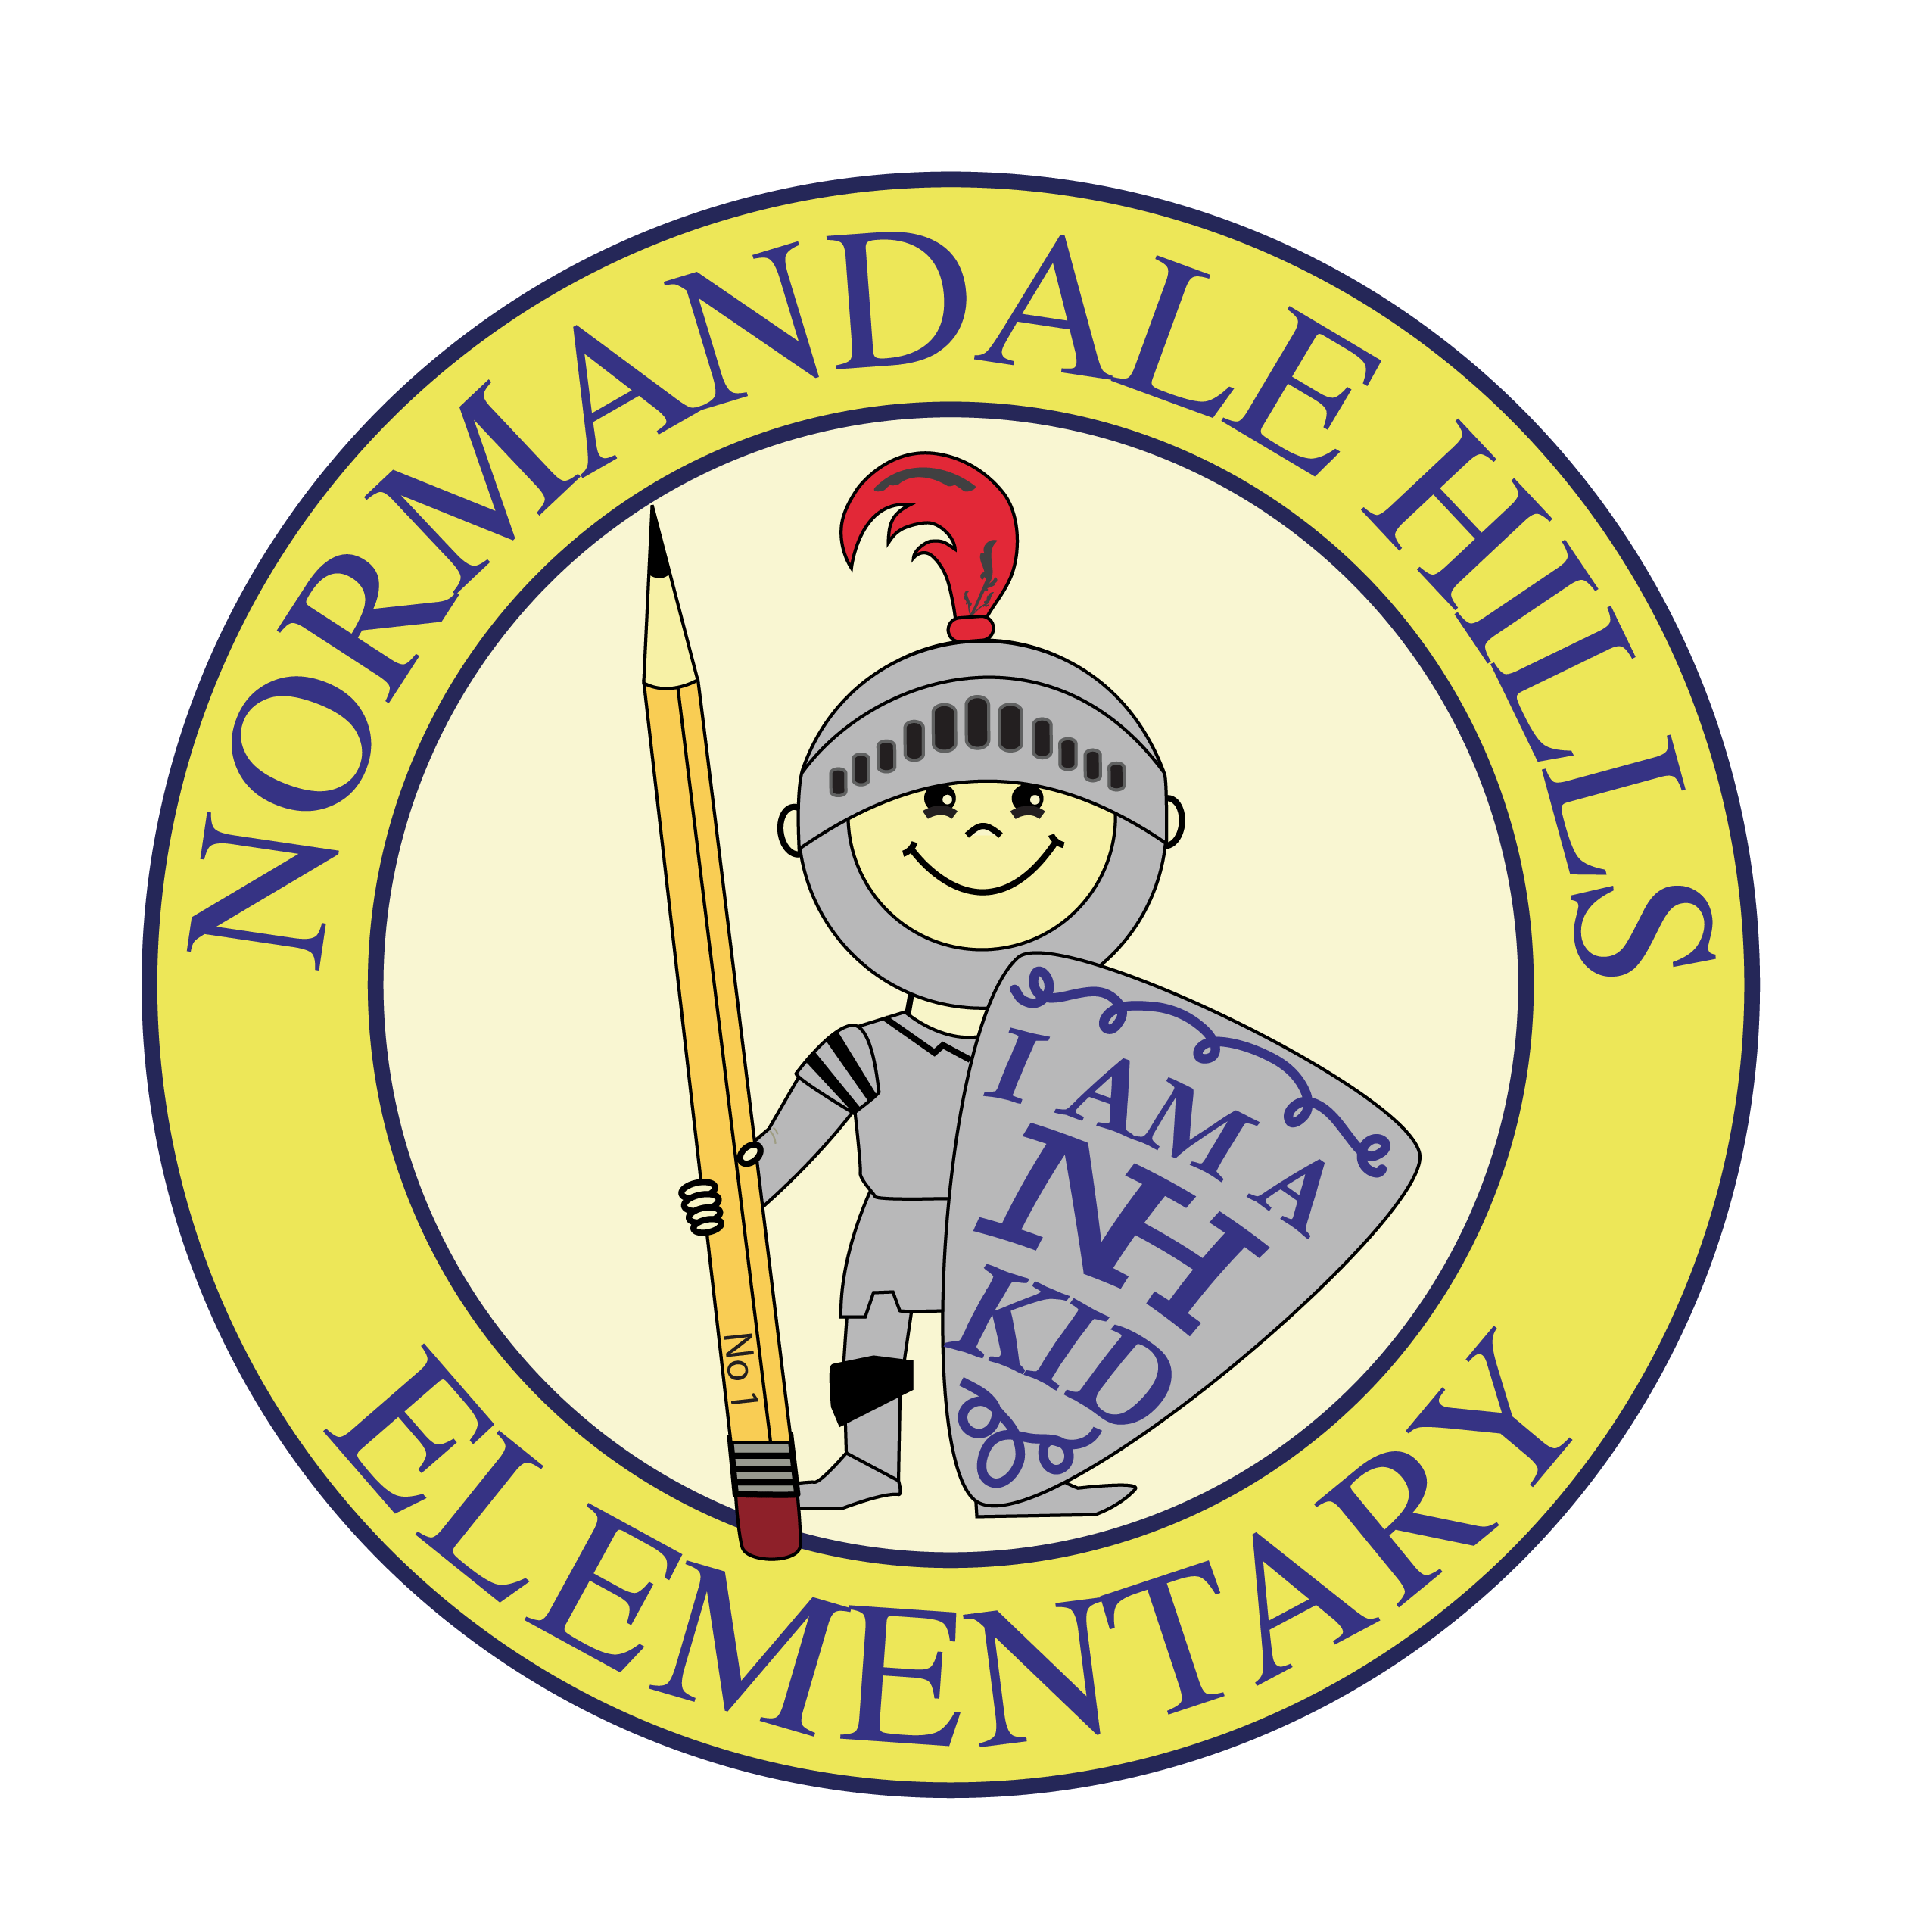 Normandale Hills Elementary School Knights logo